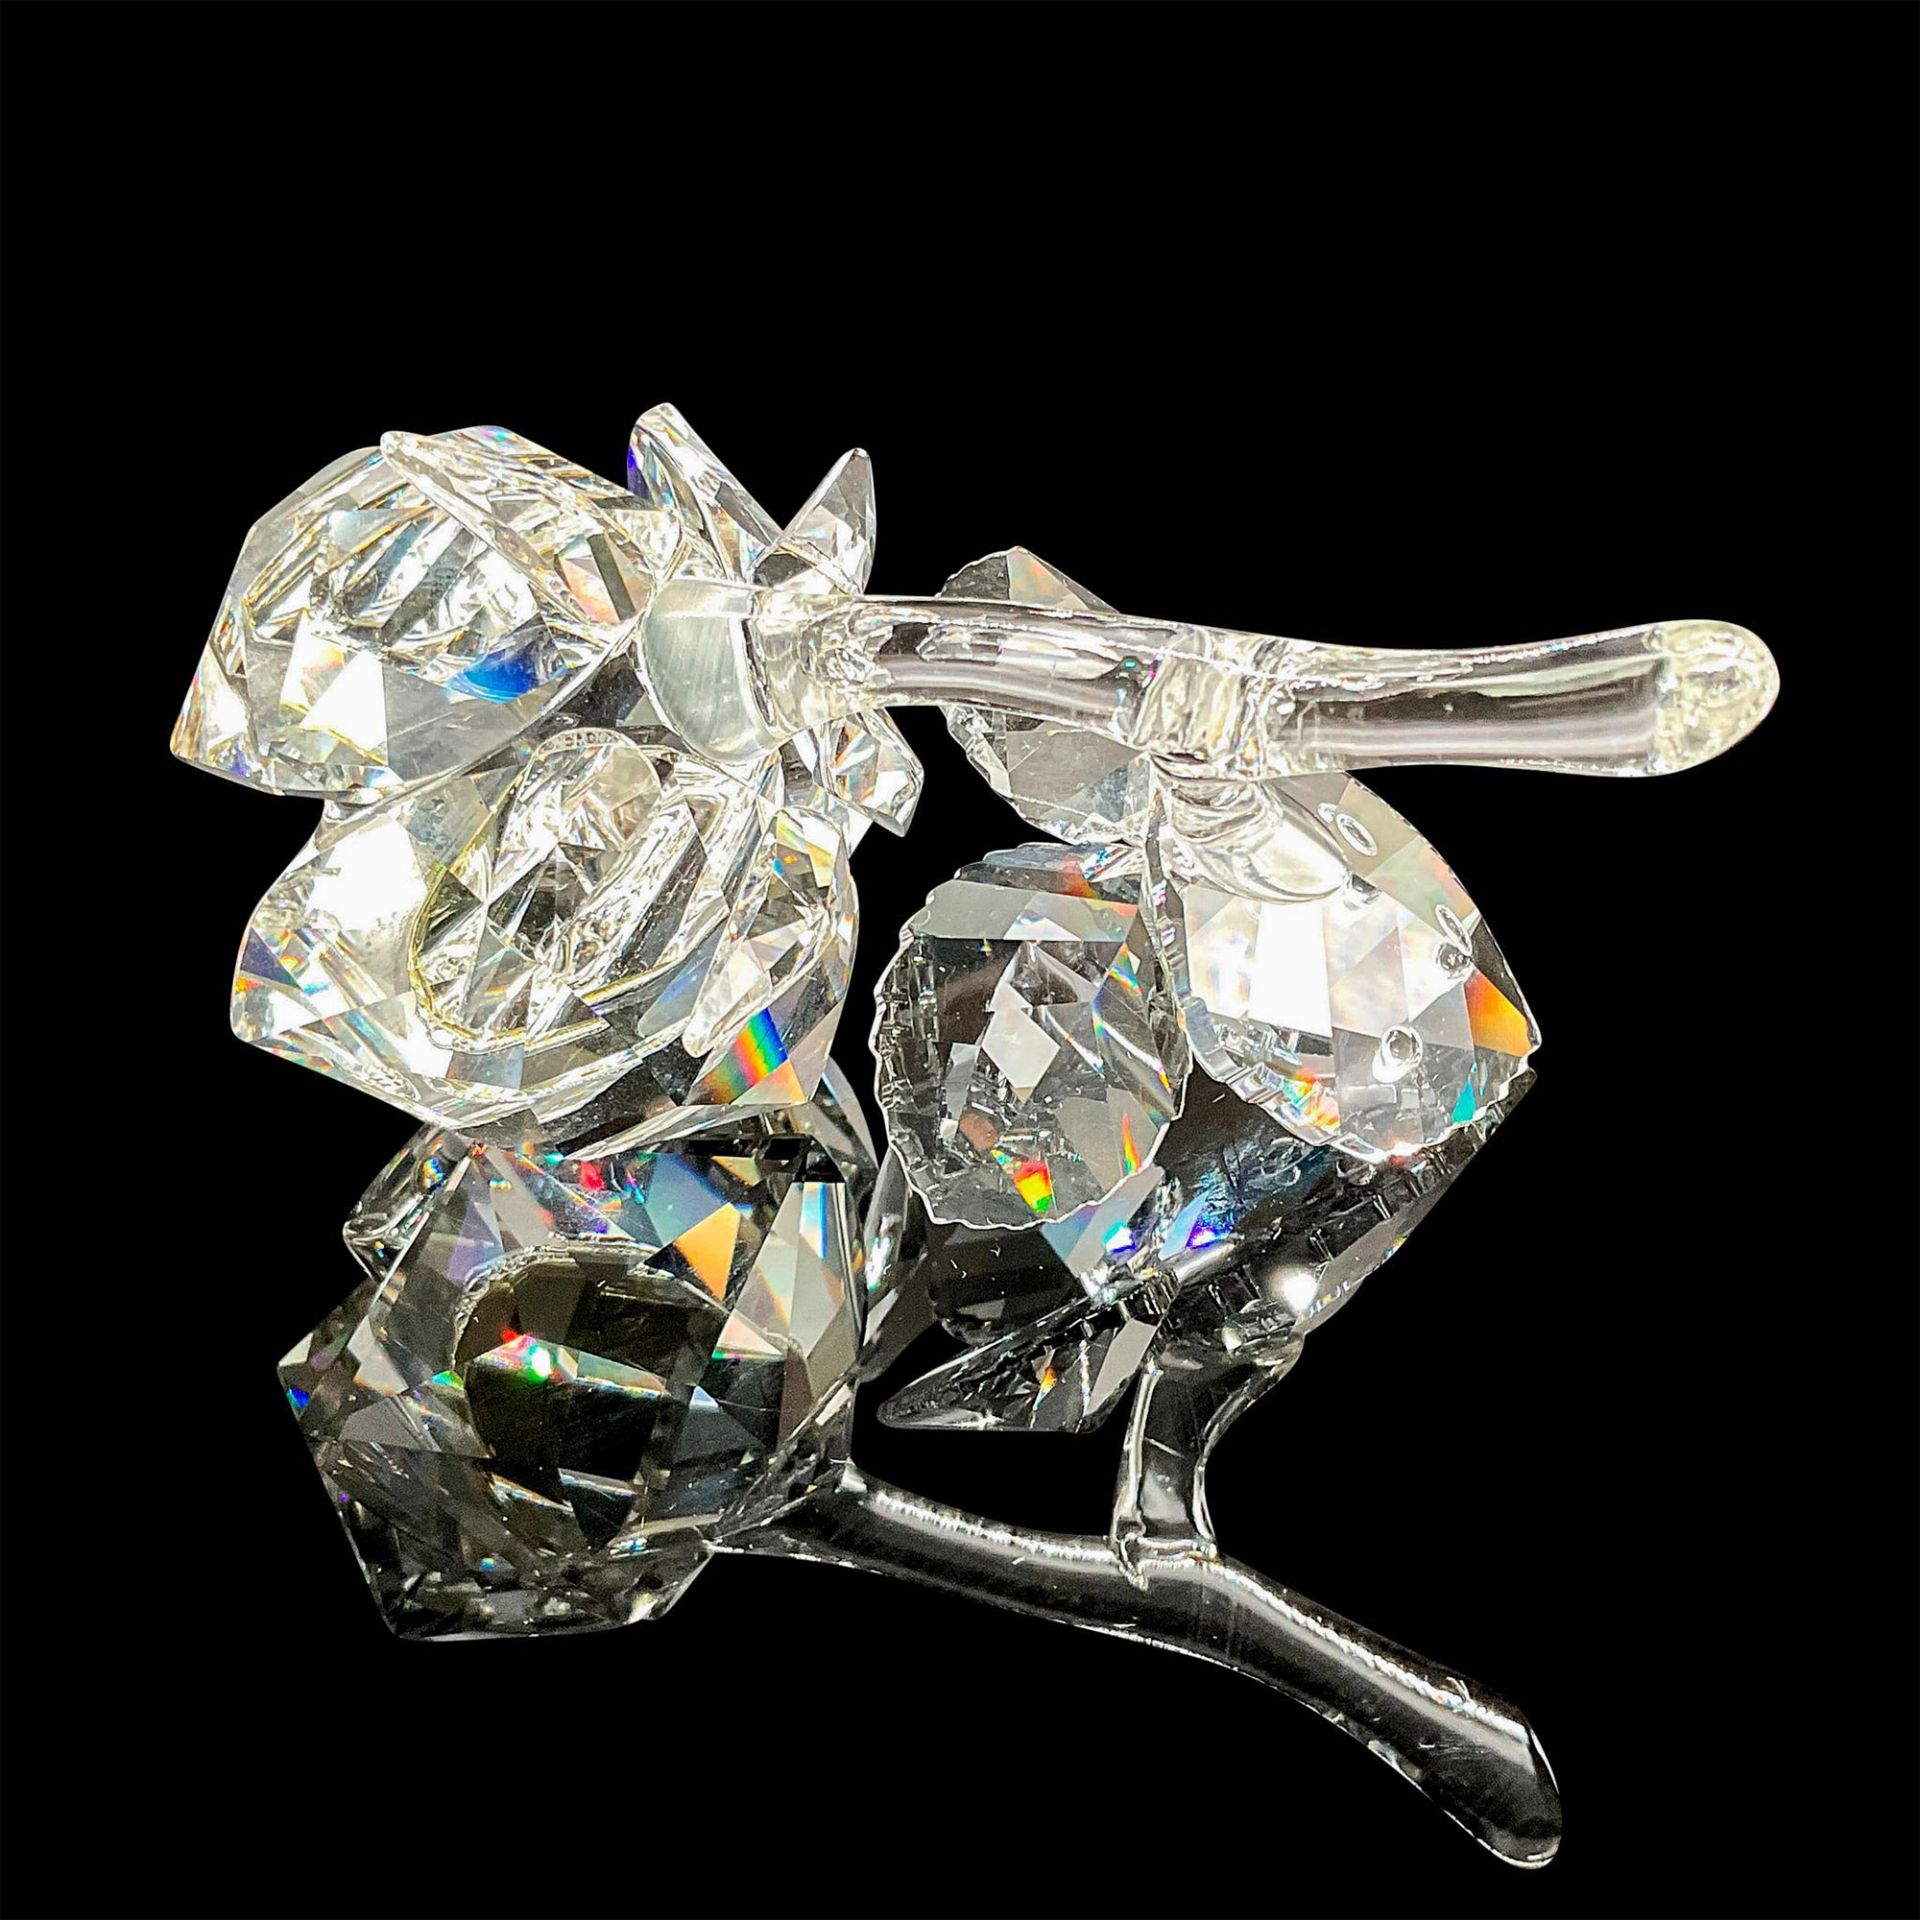 Swarovski Silver Crystal Figurine, Rose - Image 4 of 4